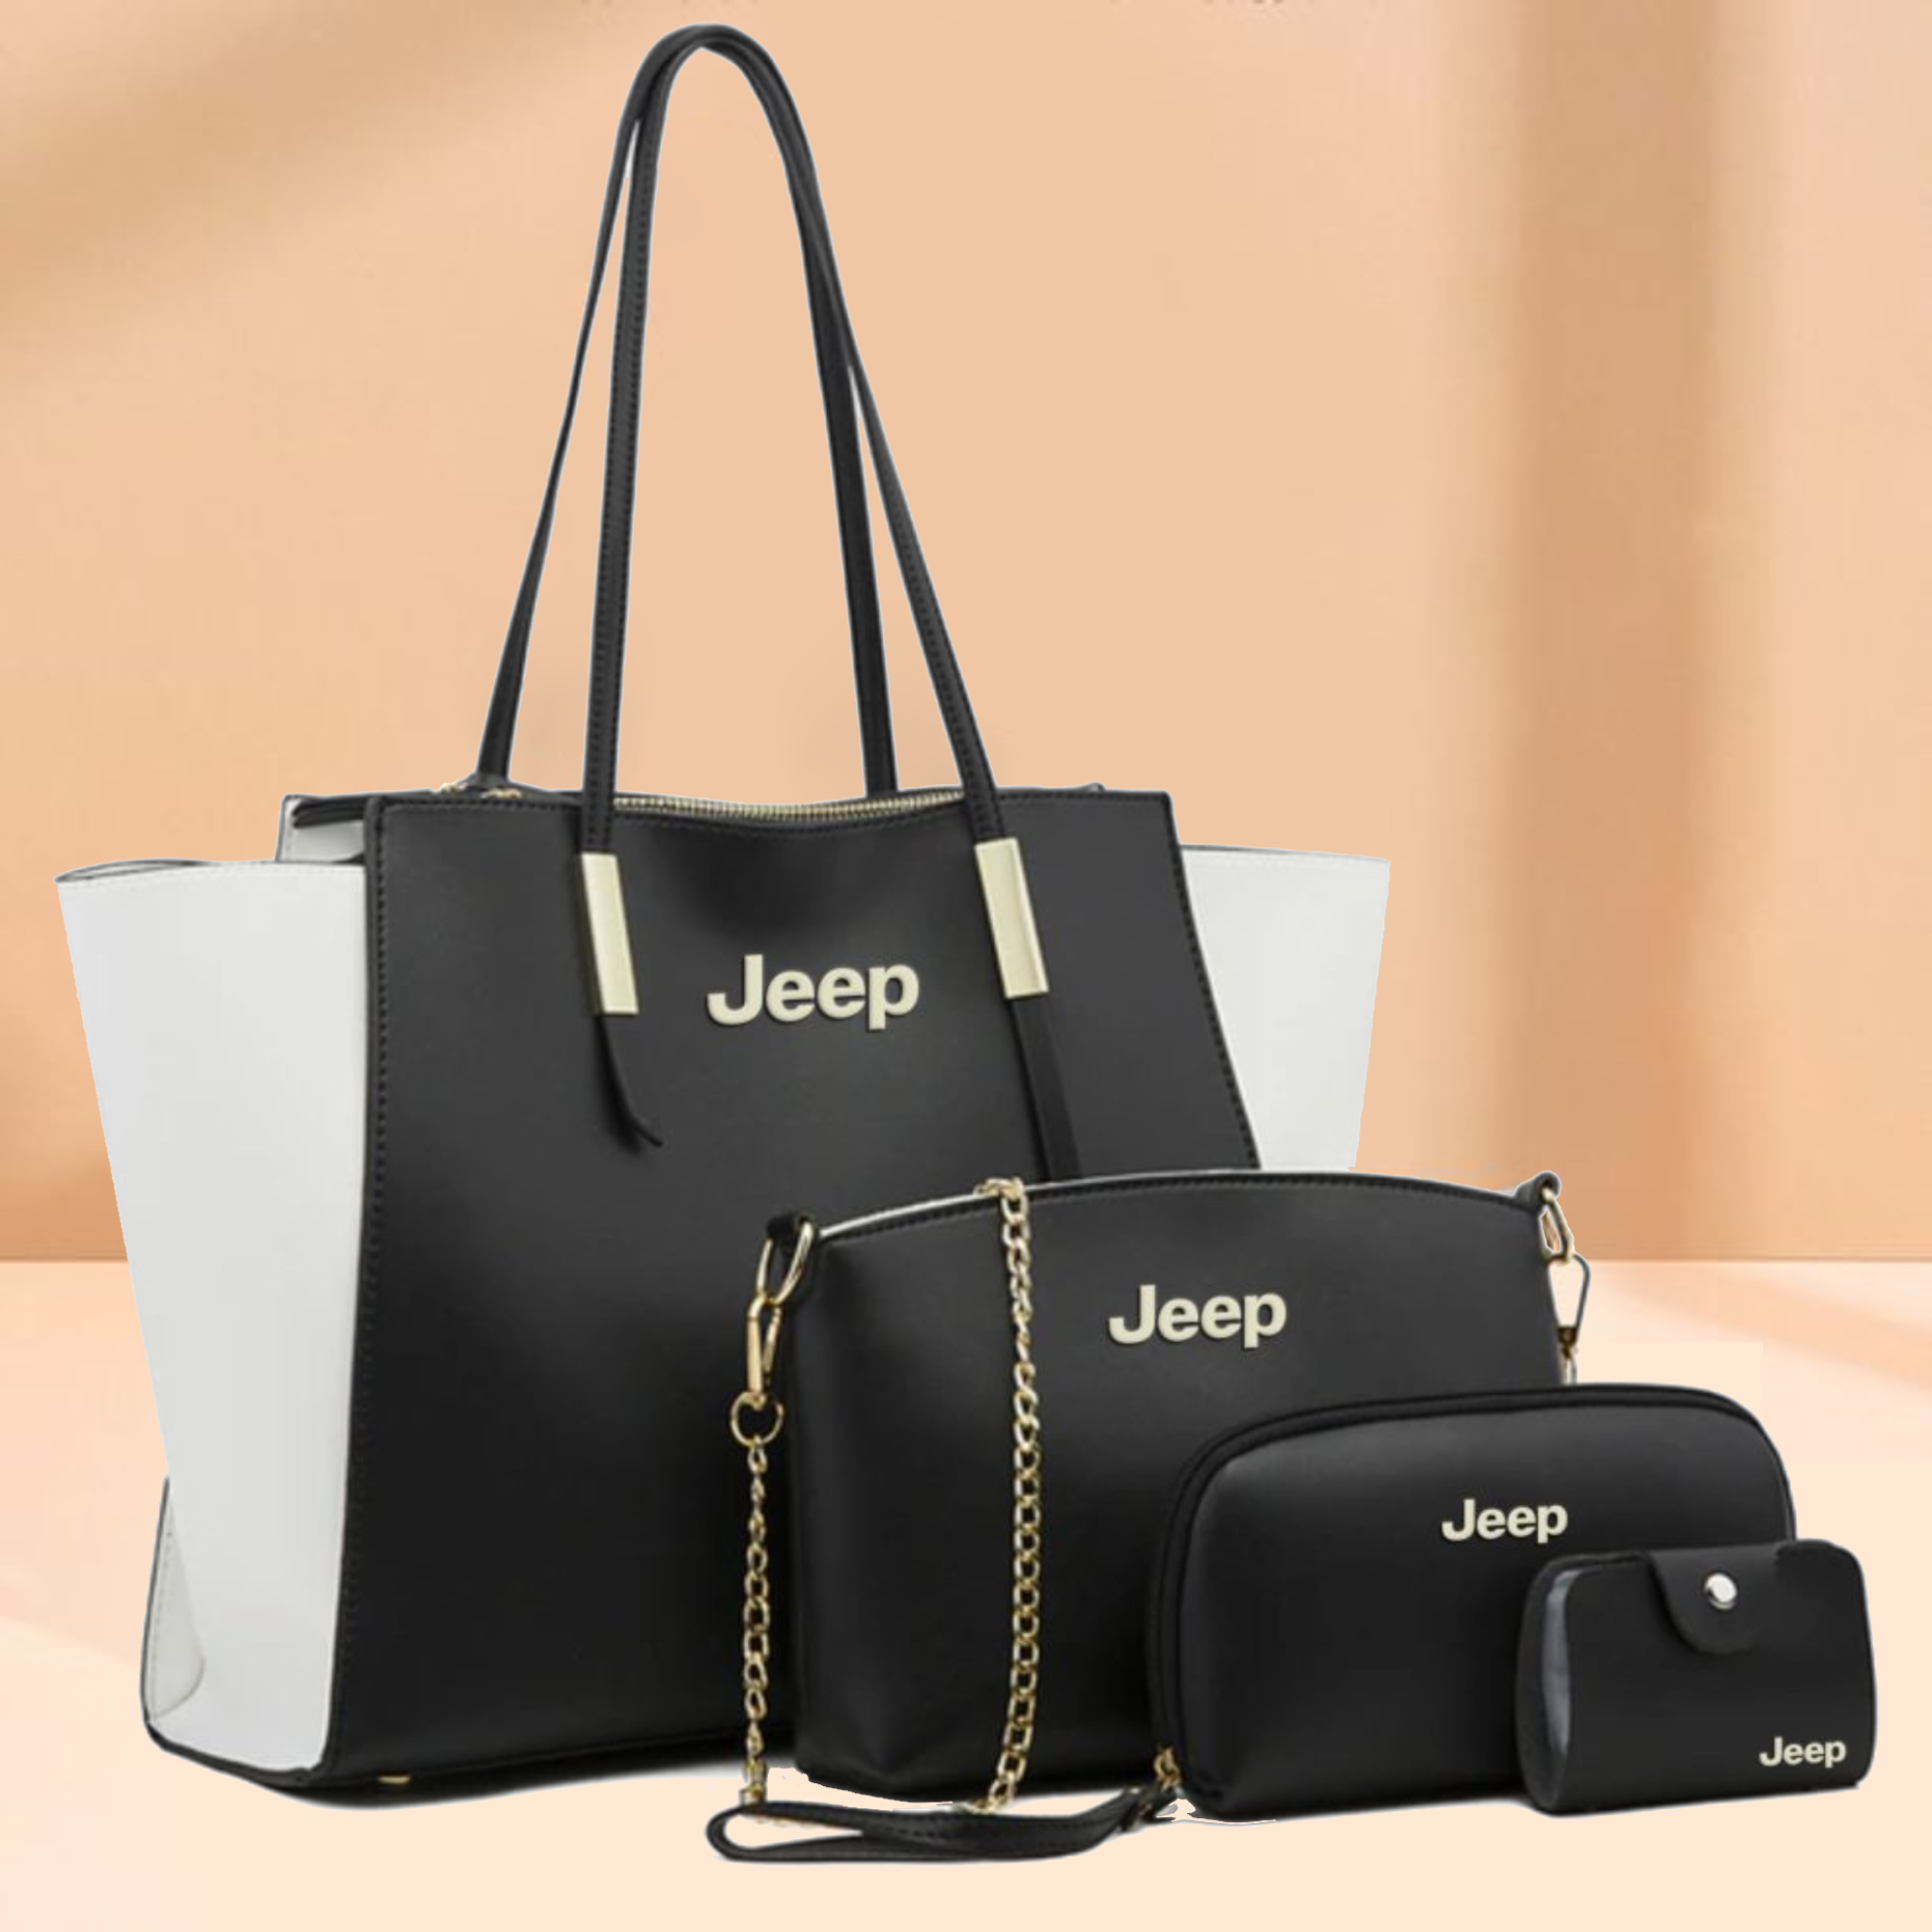 Jeep Luxury Leather Women Handbag with Free Polarized Glasses Gift